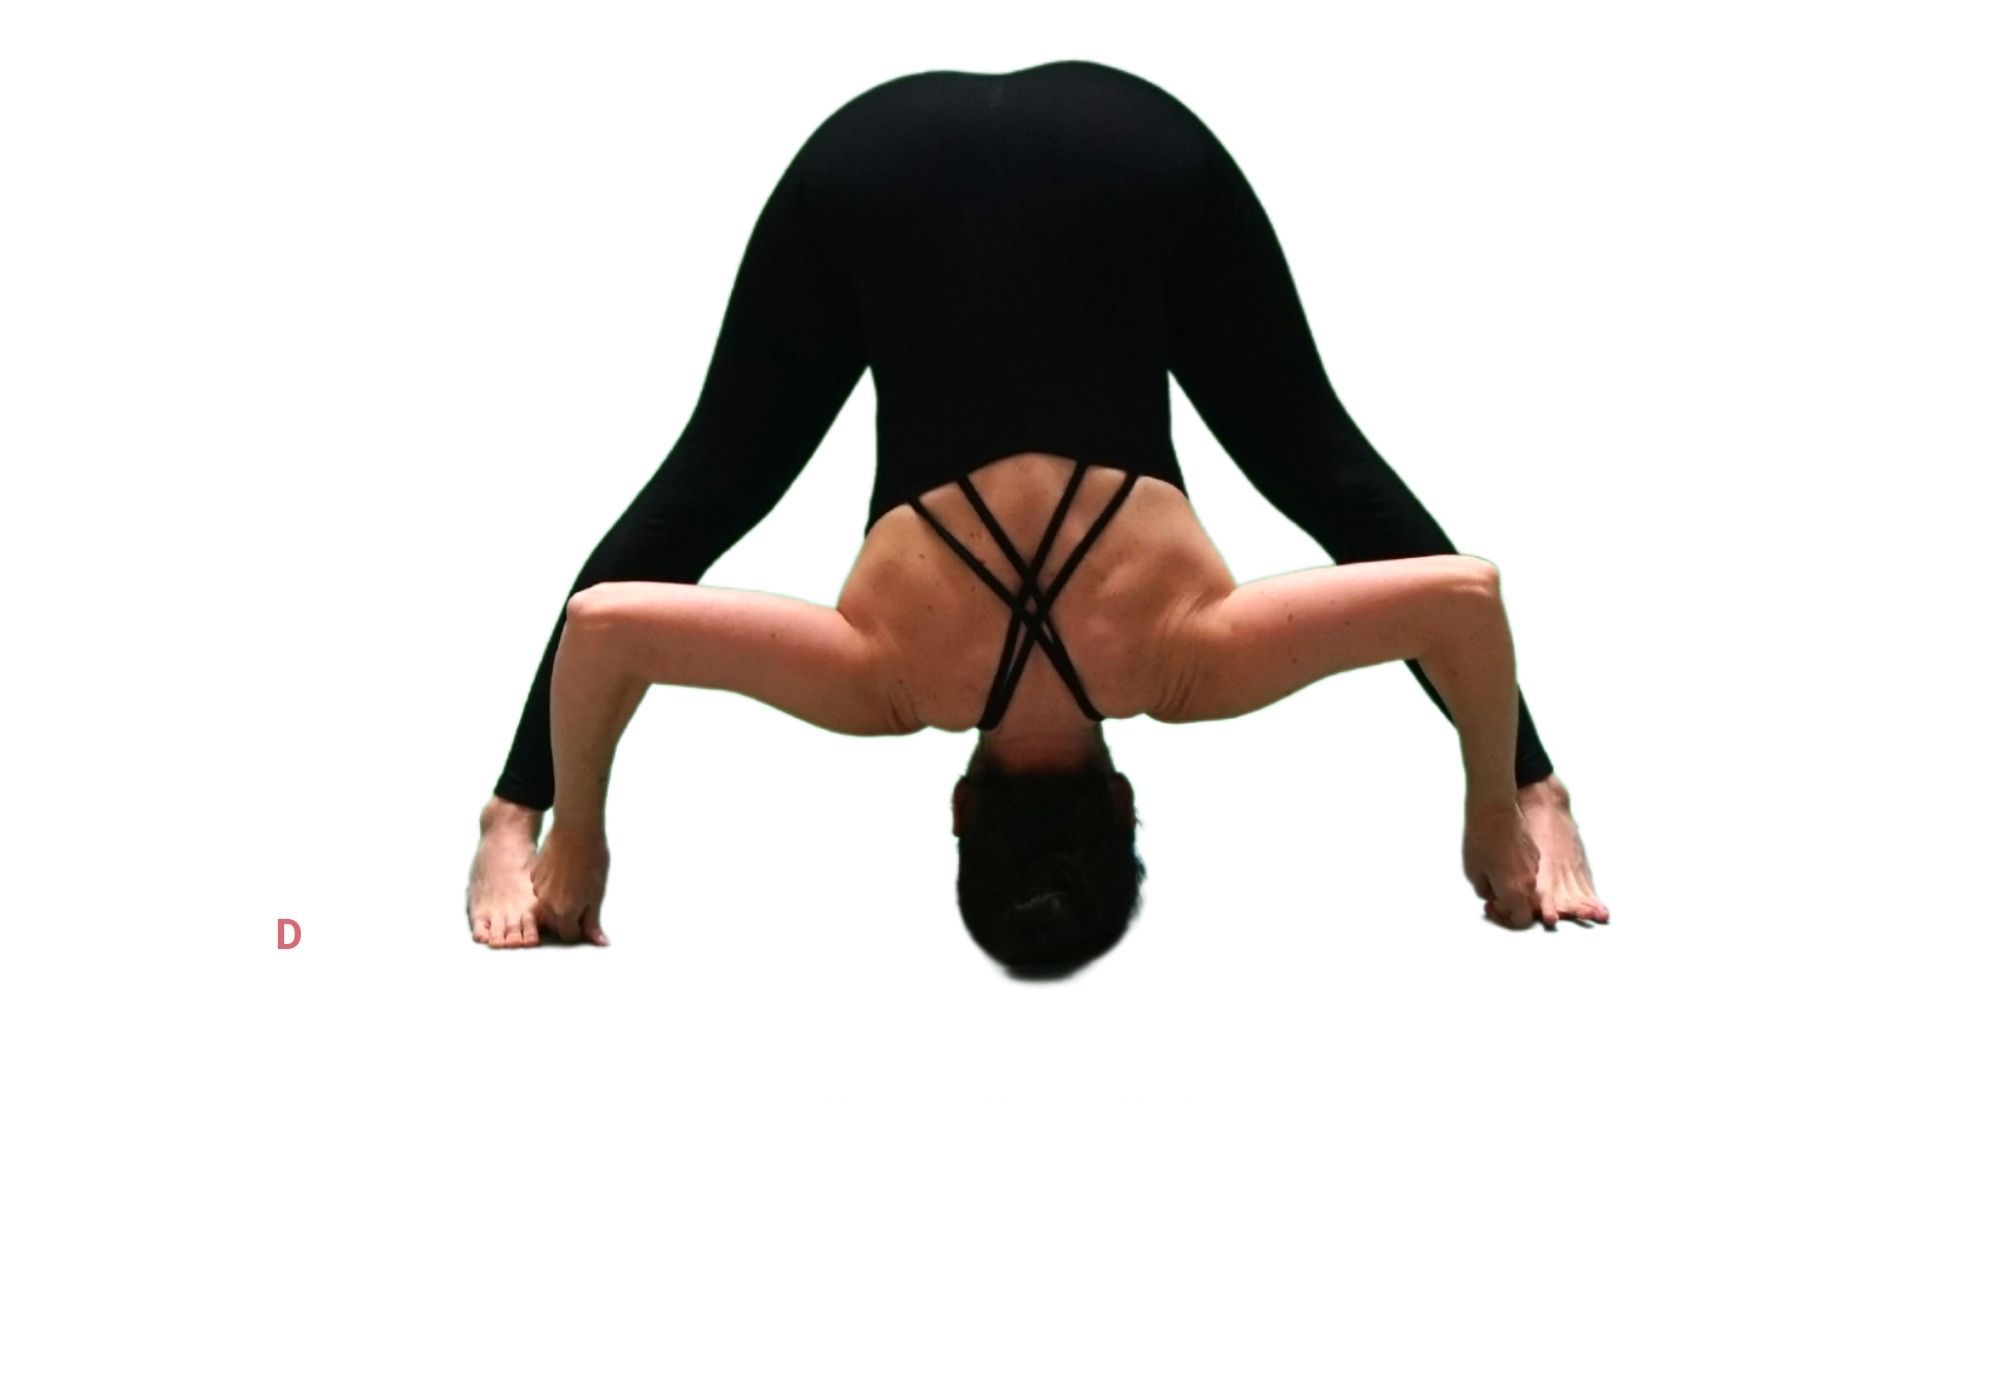 Posture de yoga : prasarita padottanasana - flexion avant debout pieds écartés D